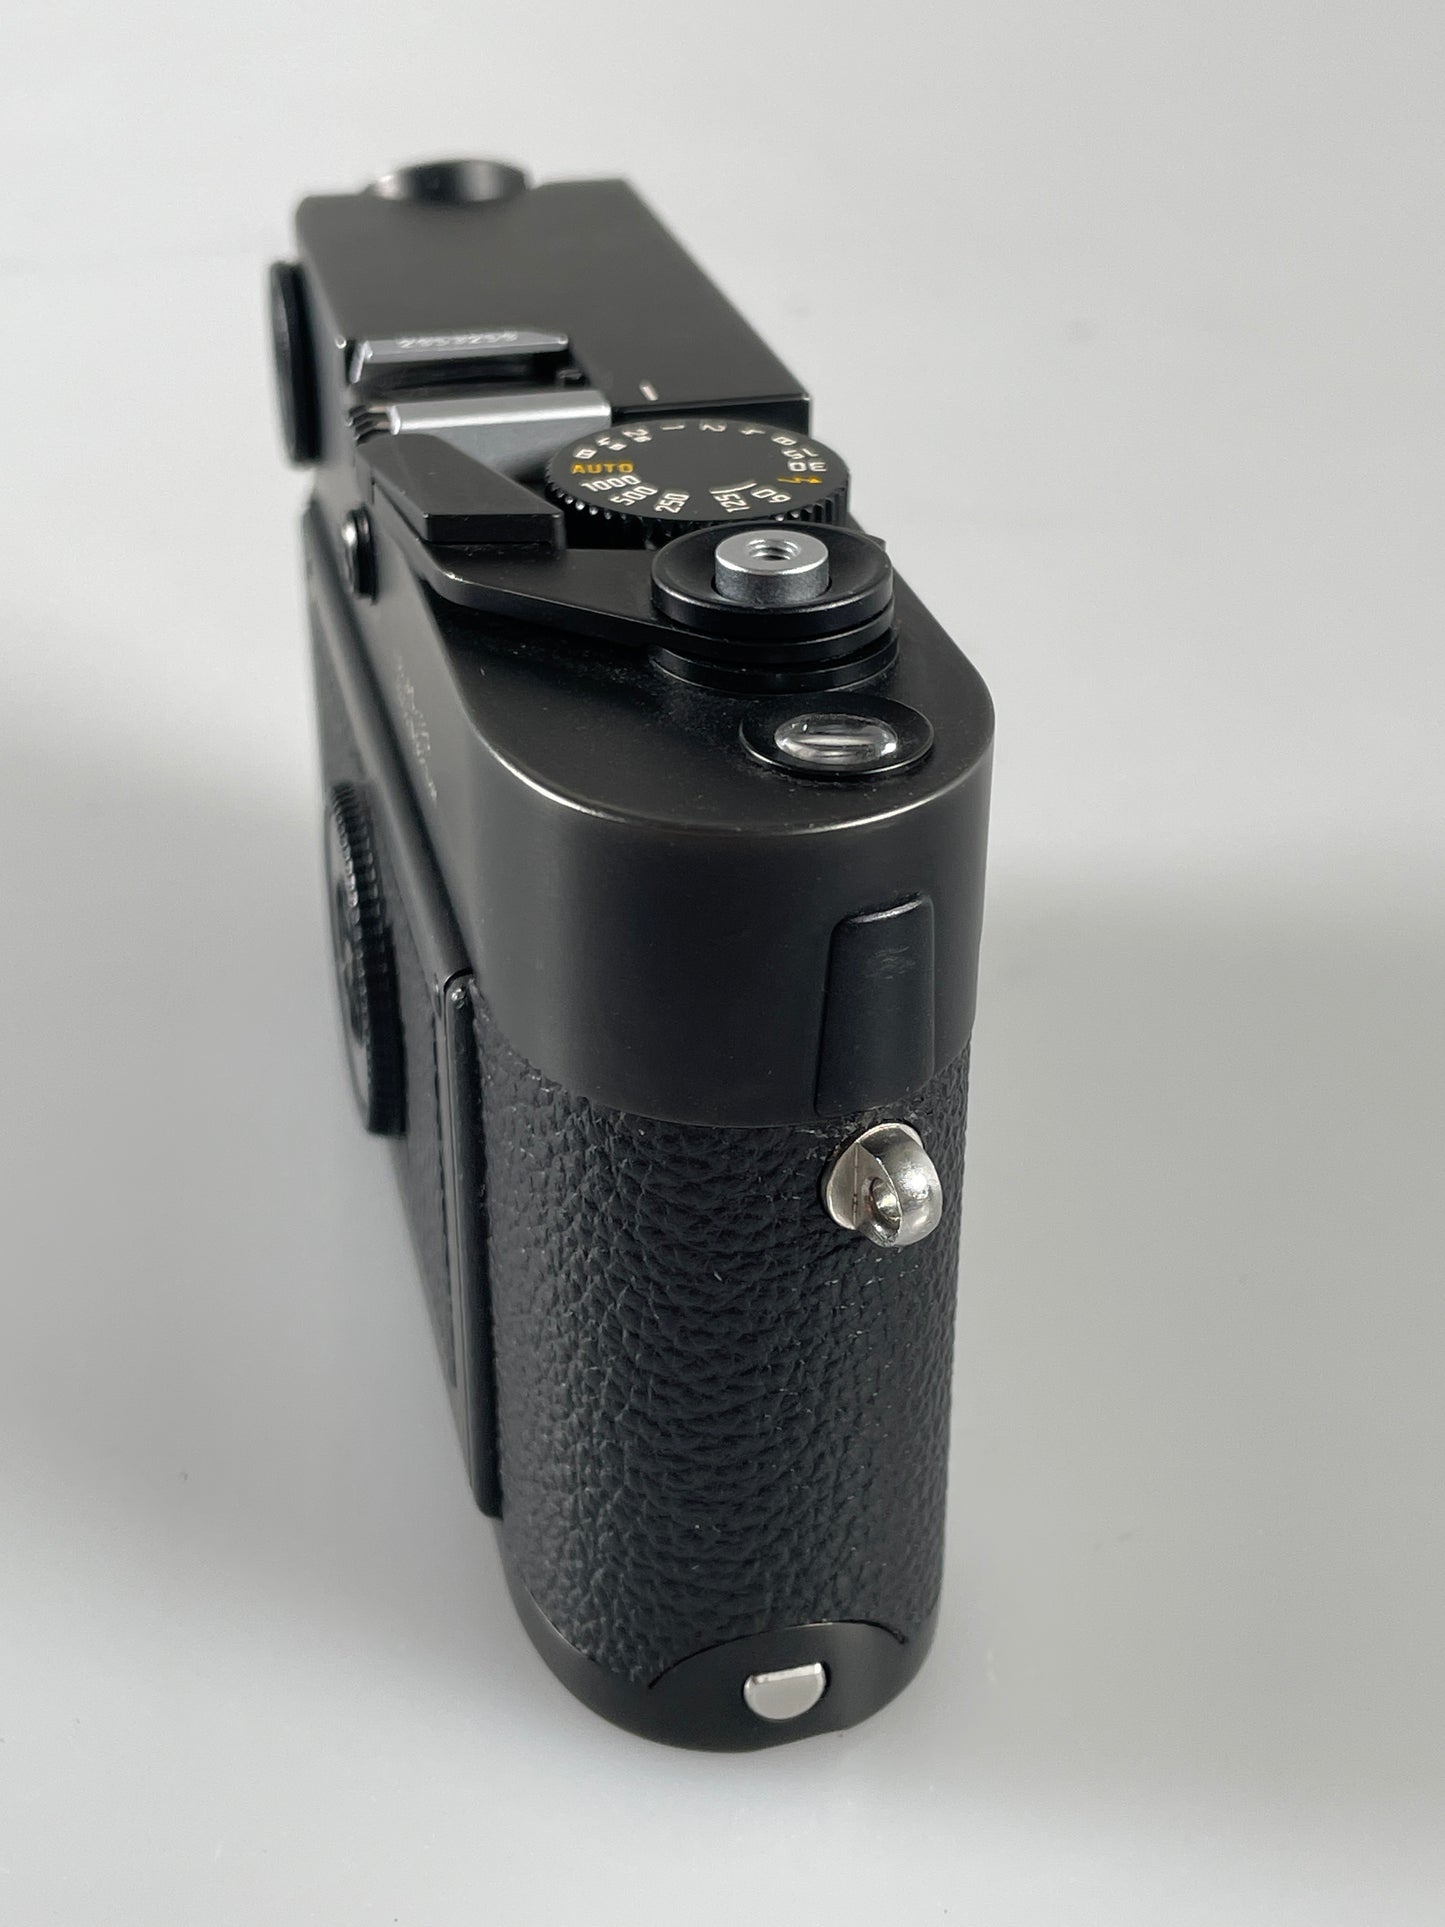 Leica M7 Black Film Rangefinder Camera body 0.72